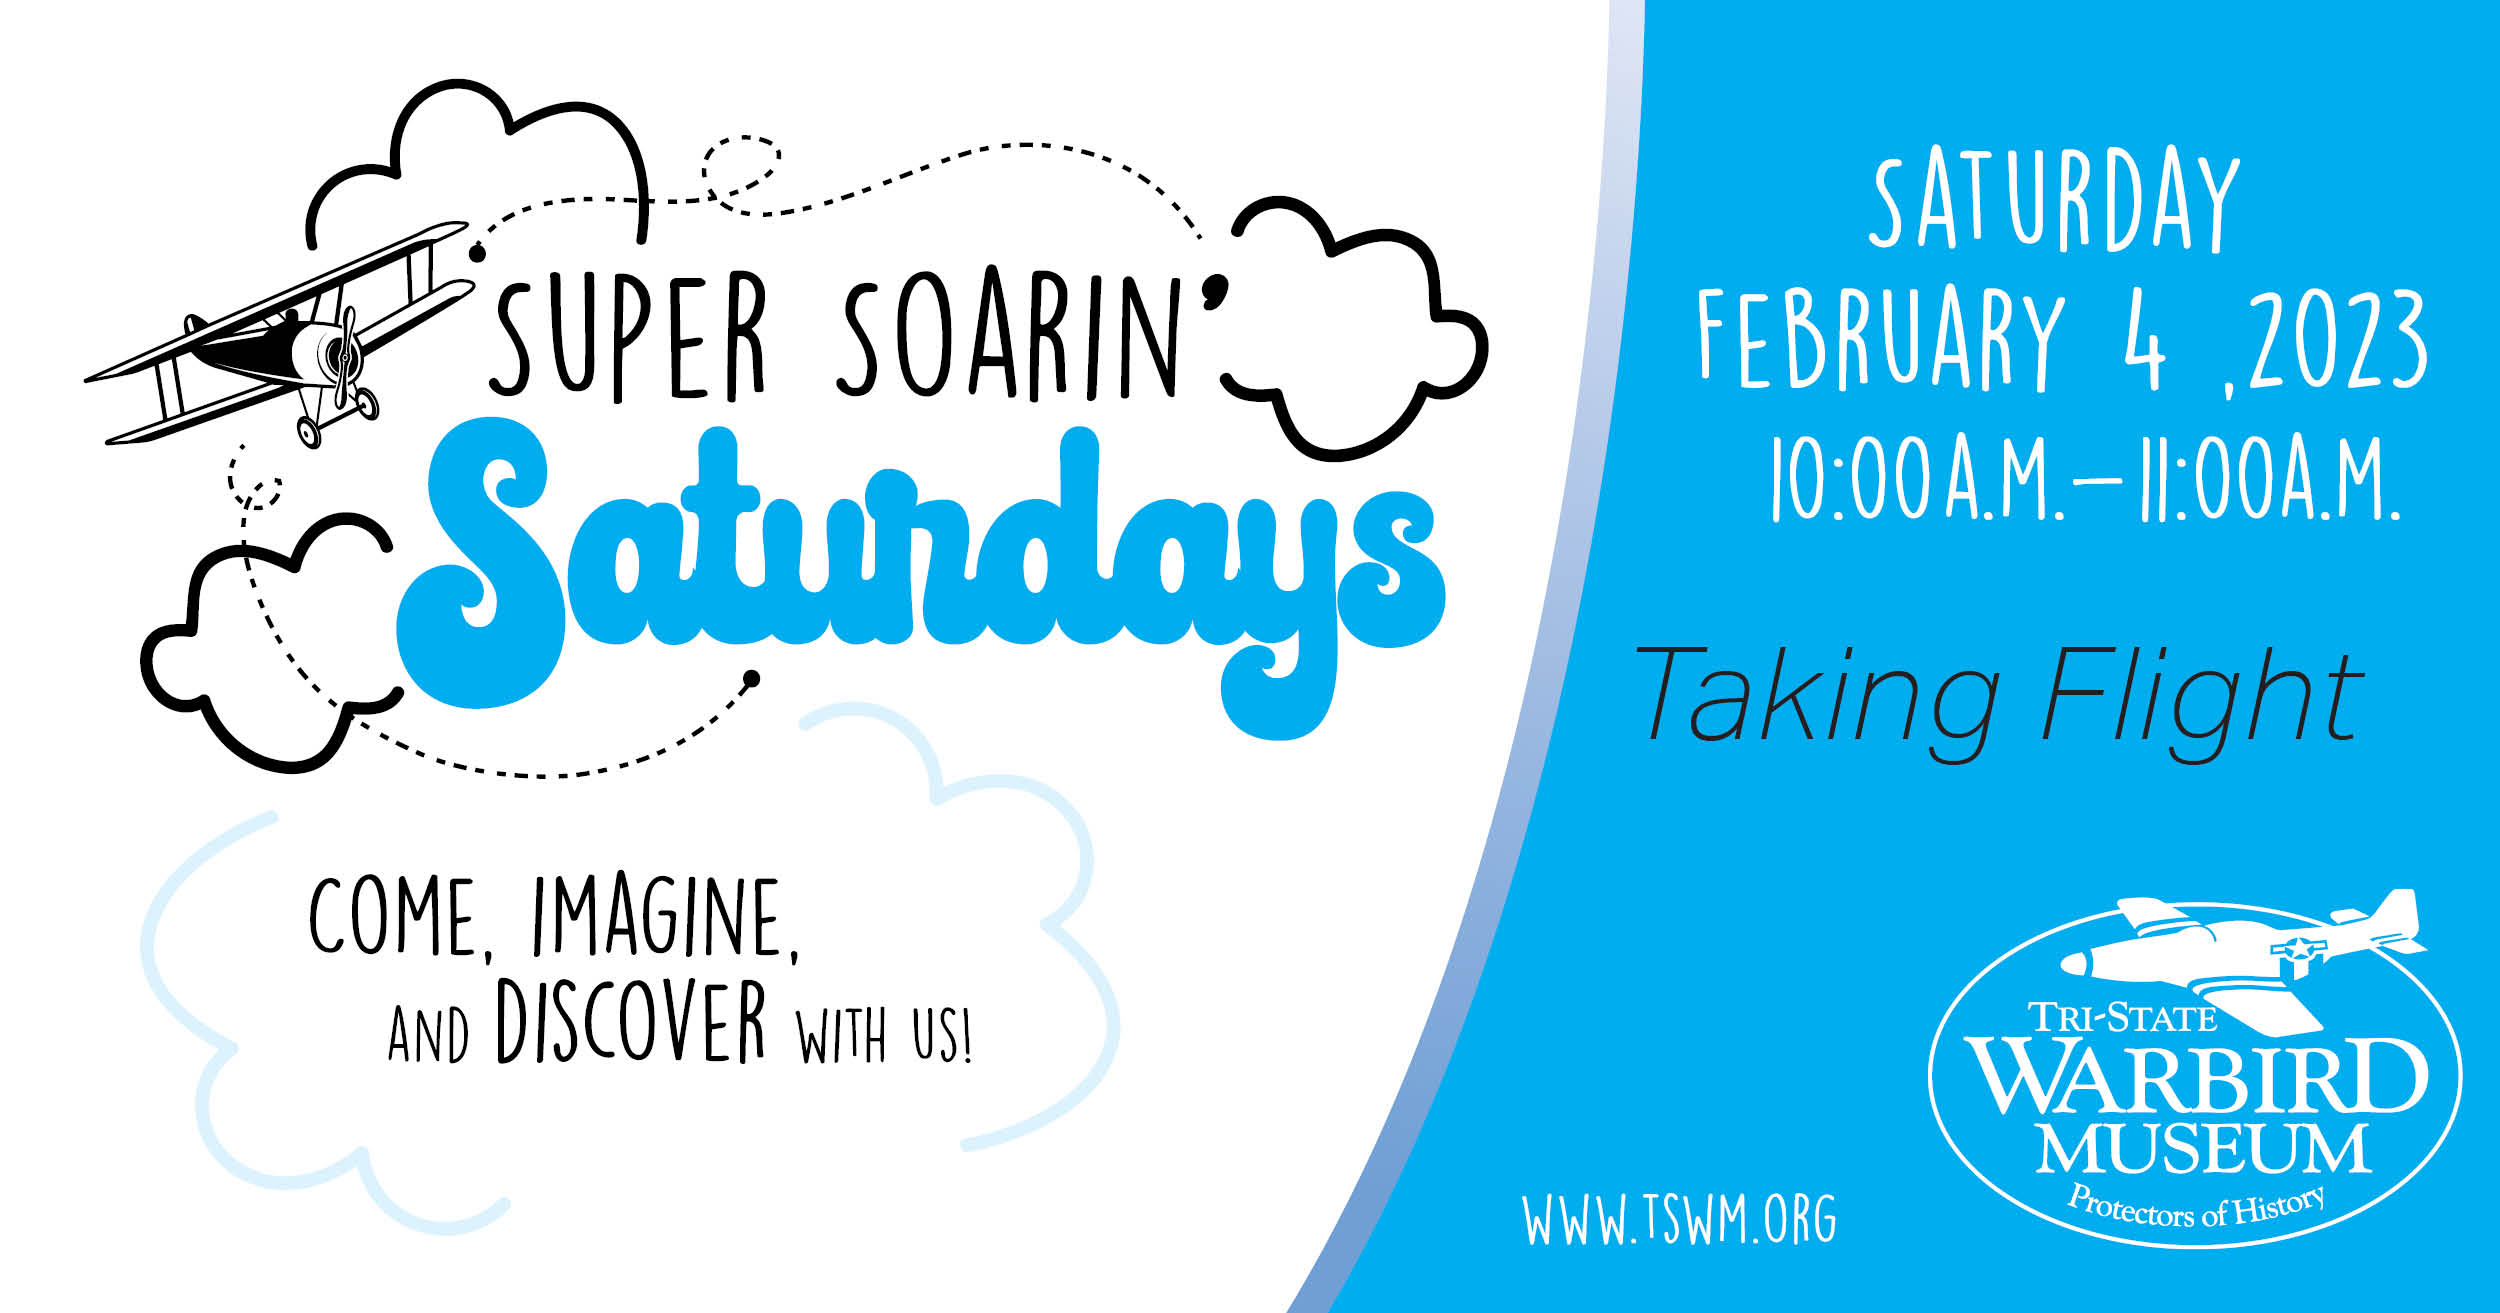 Super Soarin Saturdays February 4 2023 Taking Flight edited 8.31.22